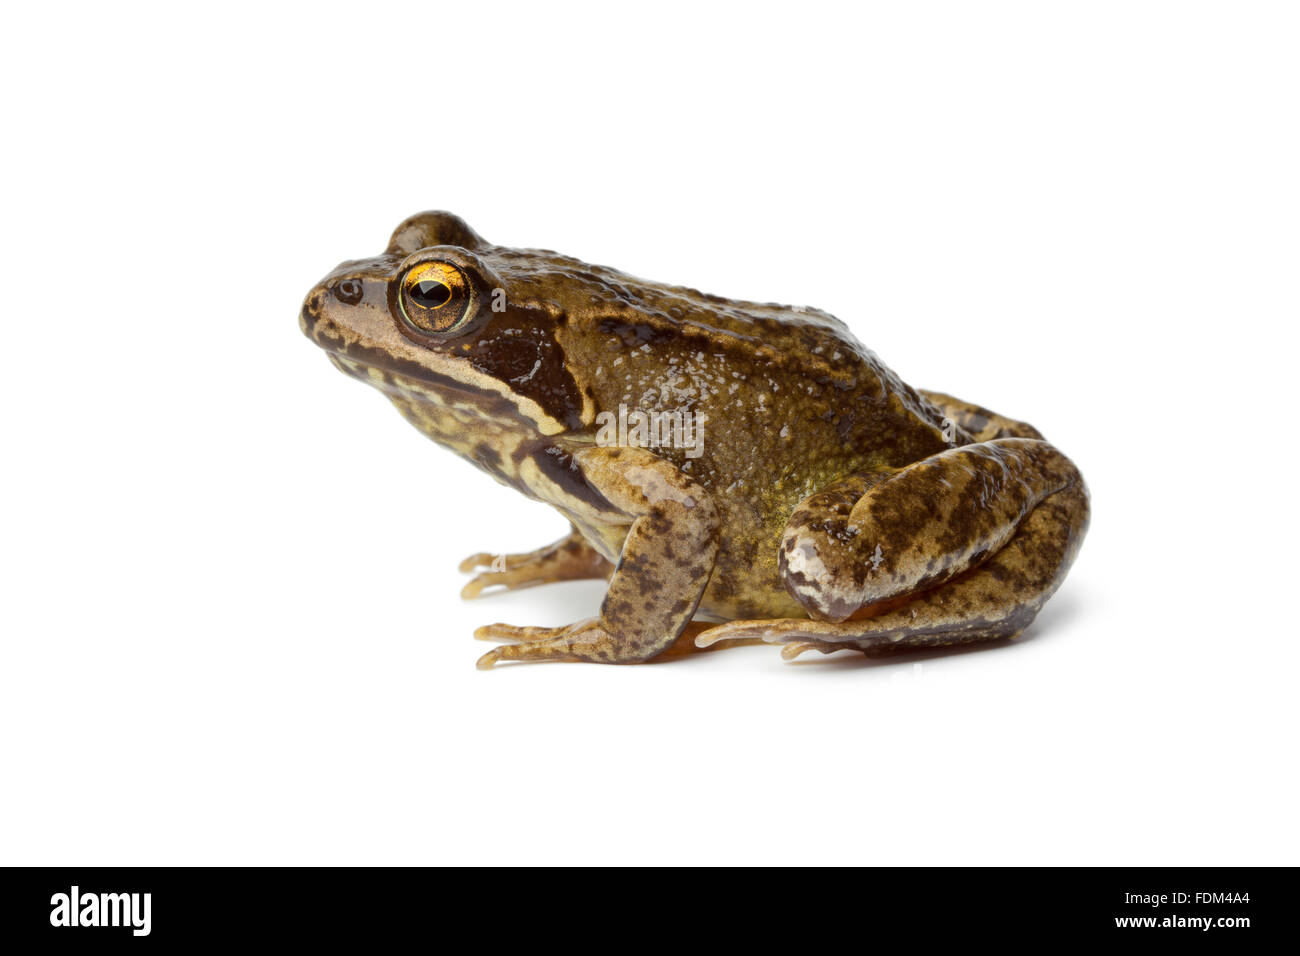 Common frog on white background Stock Photo